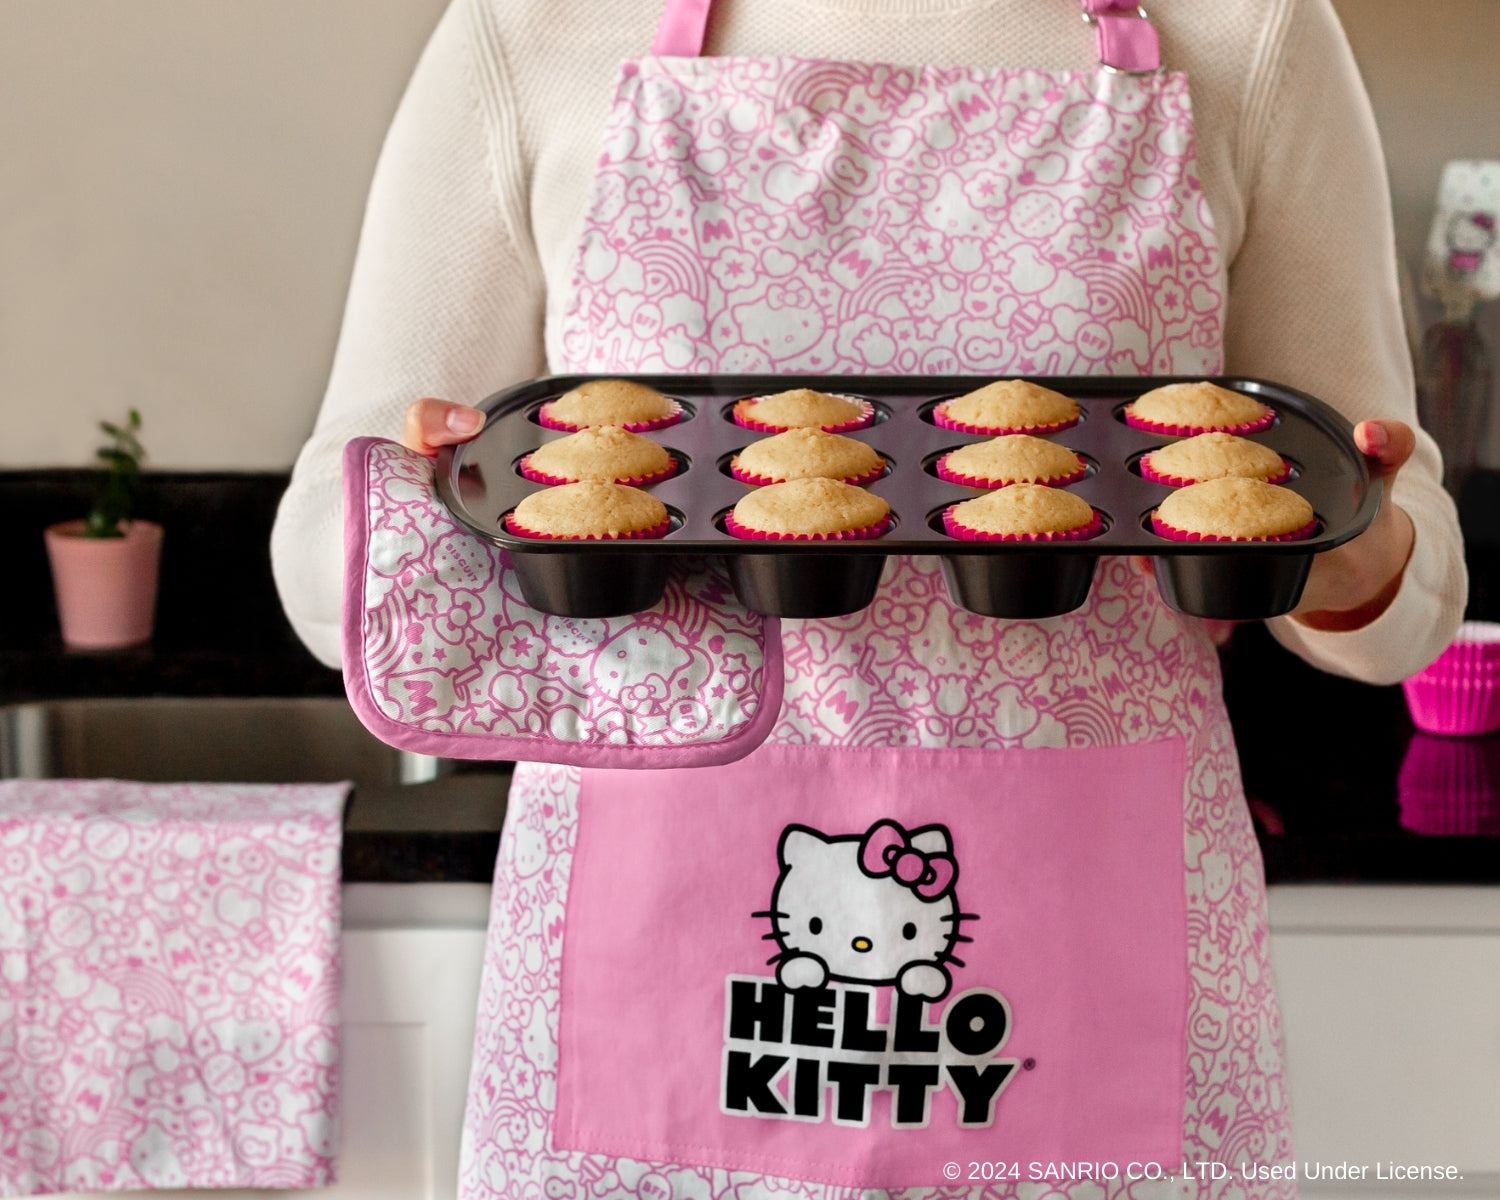 Hello Kitty® Adult Apron and Potholder Set